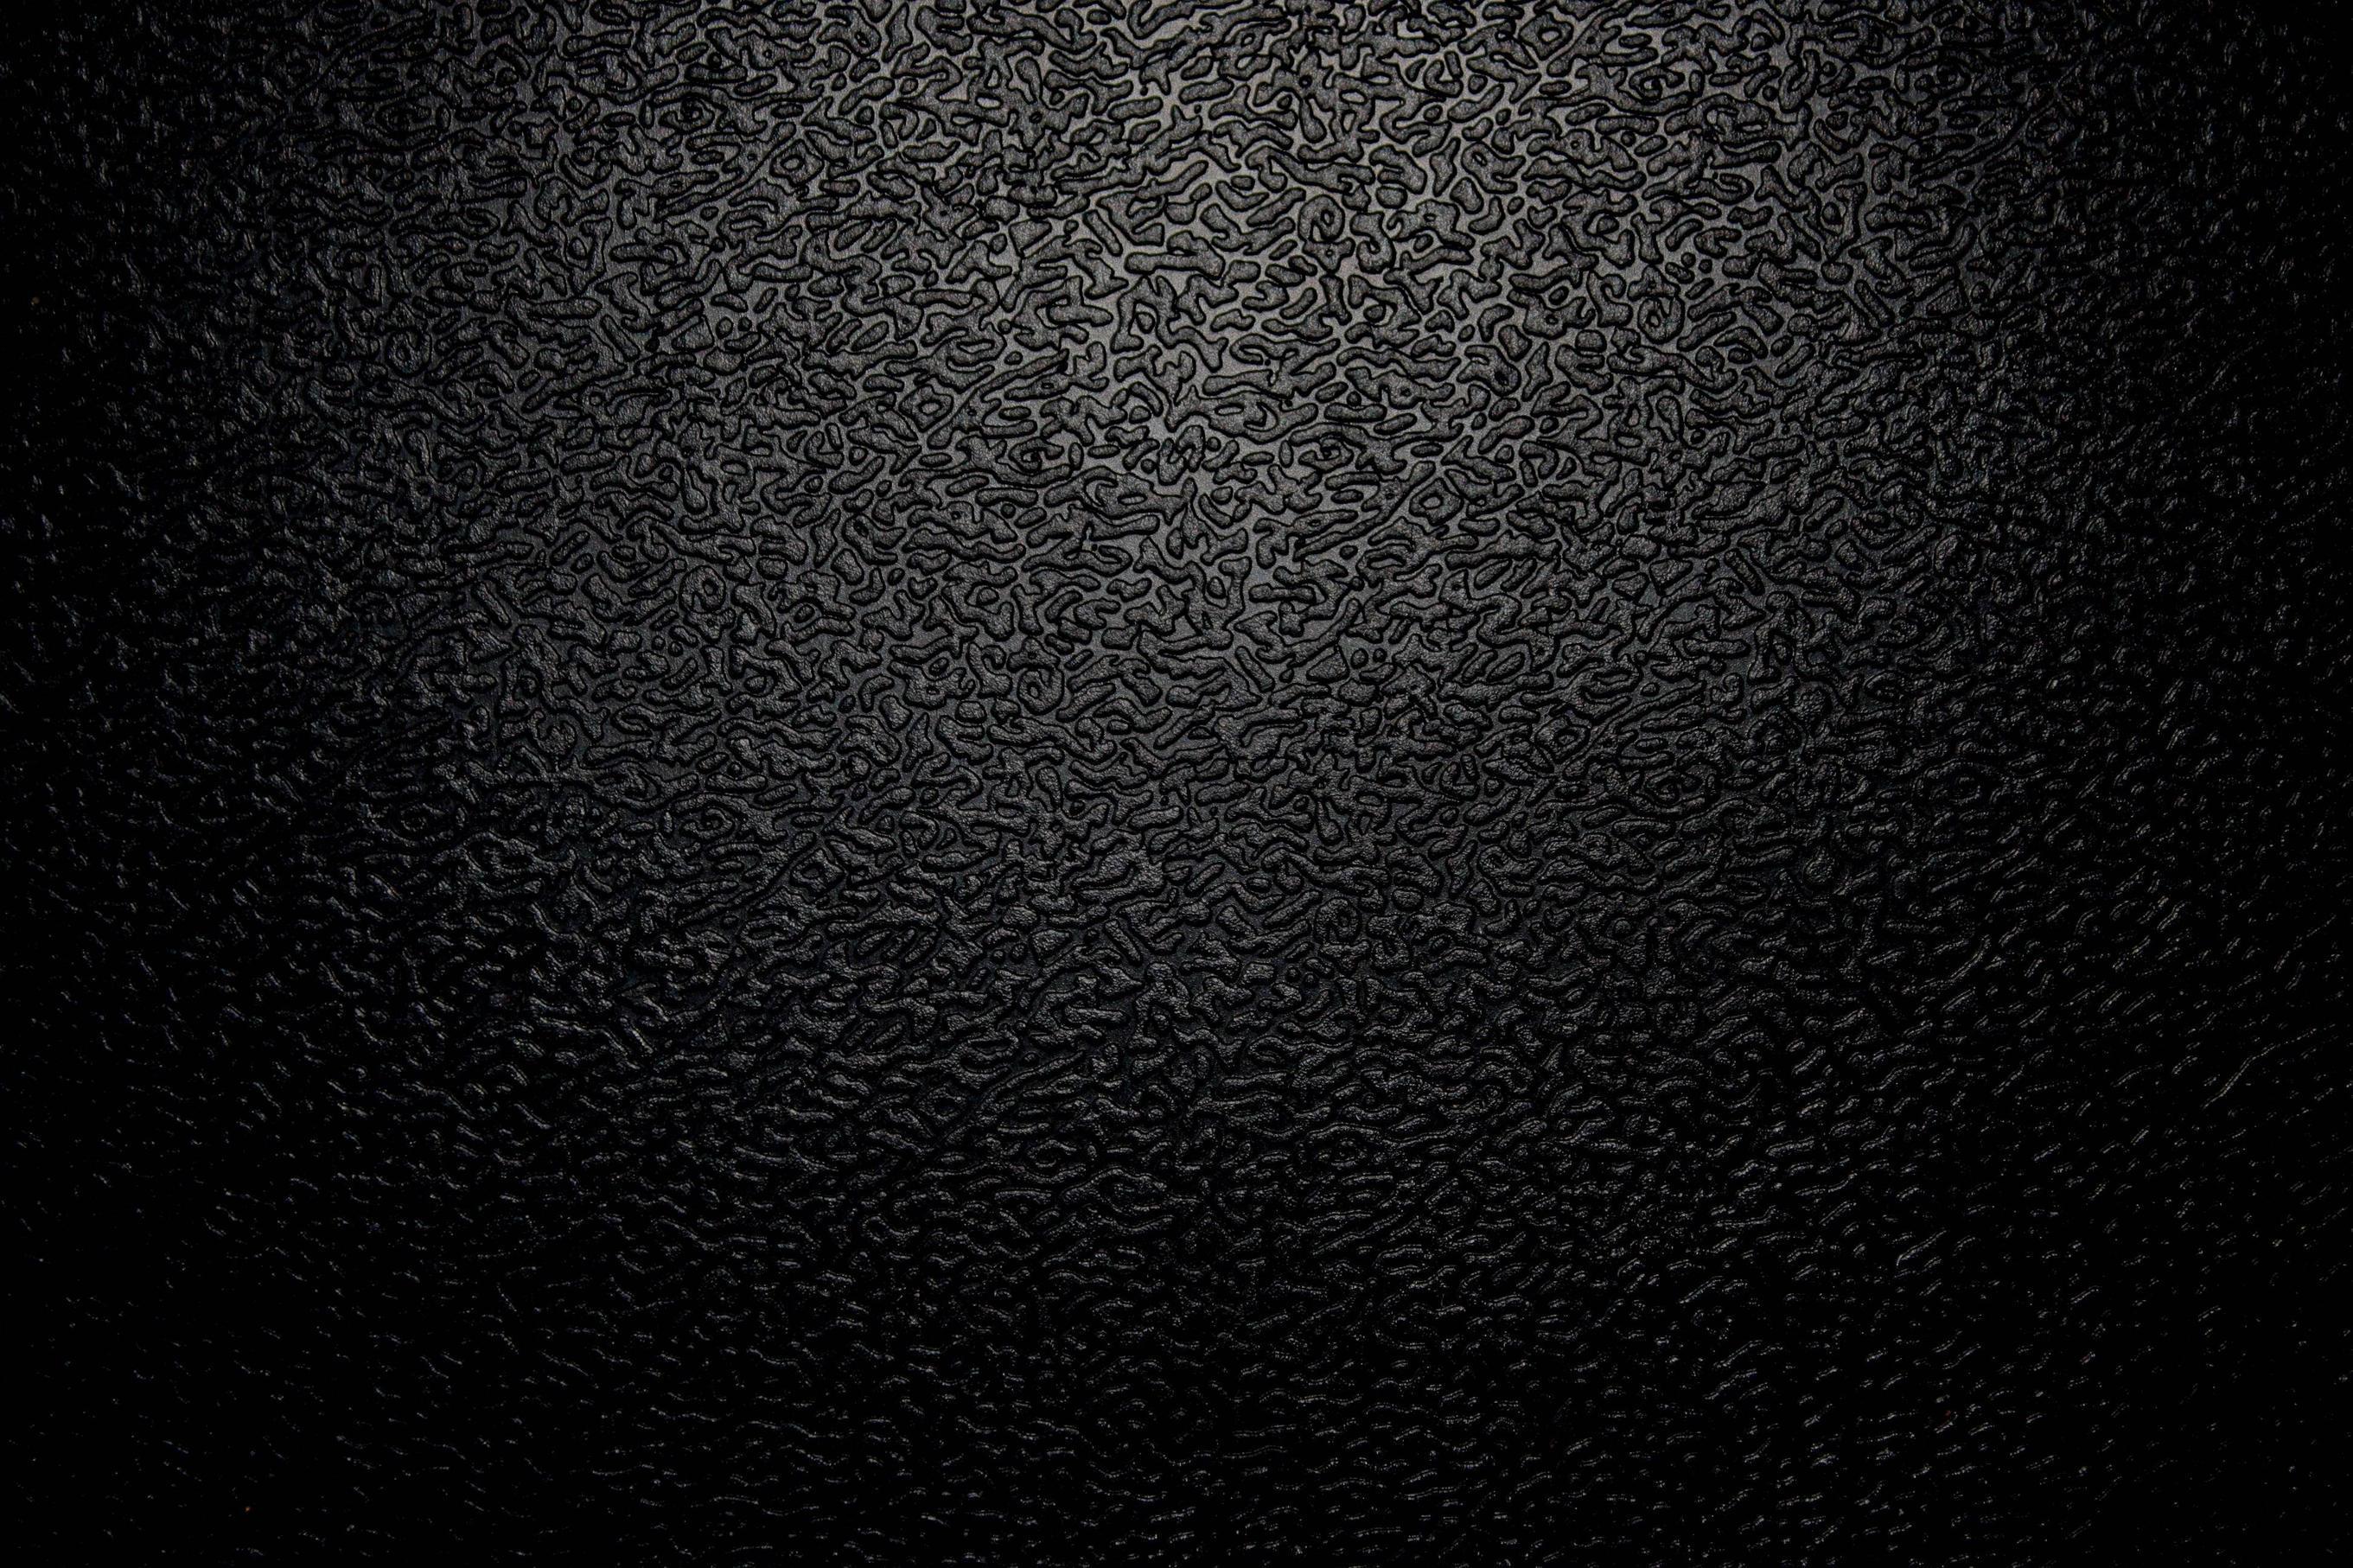 Texture Black Wallpaper Background : Background texture background